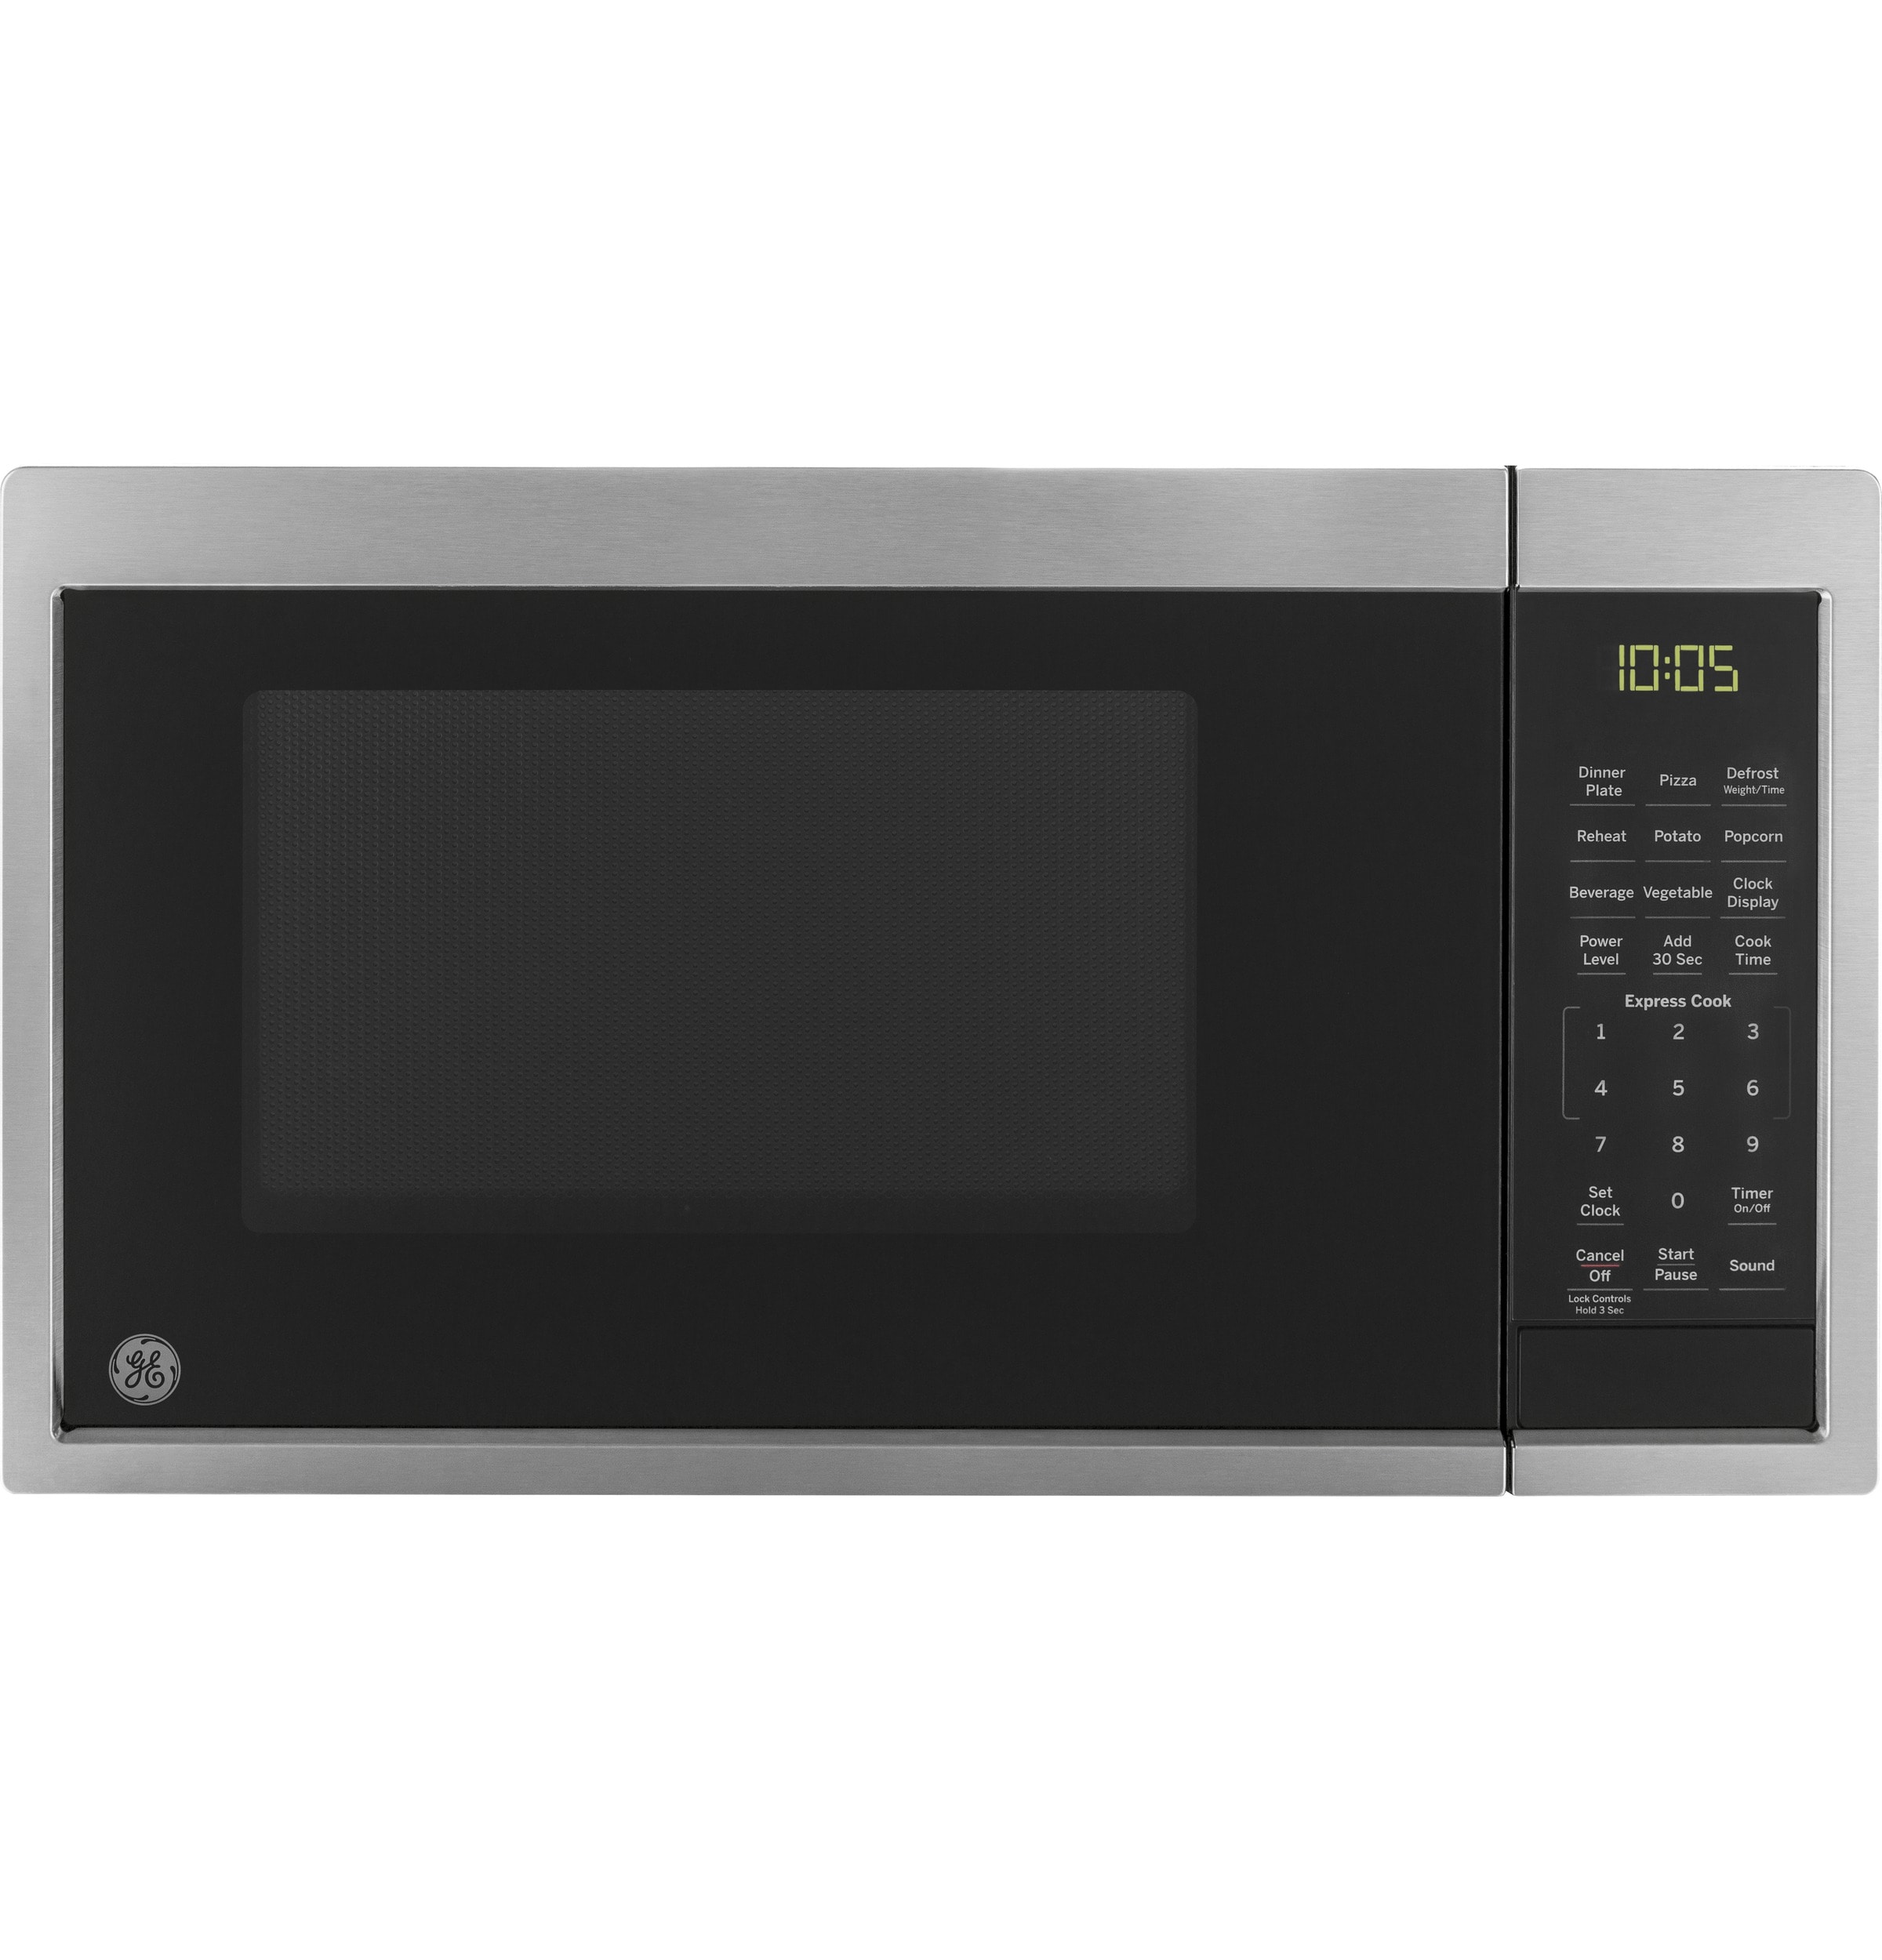 900 Watt Microwave Compact 0.9 Cu ft Capacity 10 Power Level 6 pre-set menu 